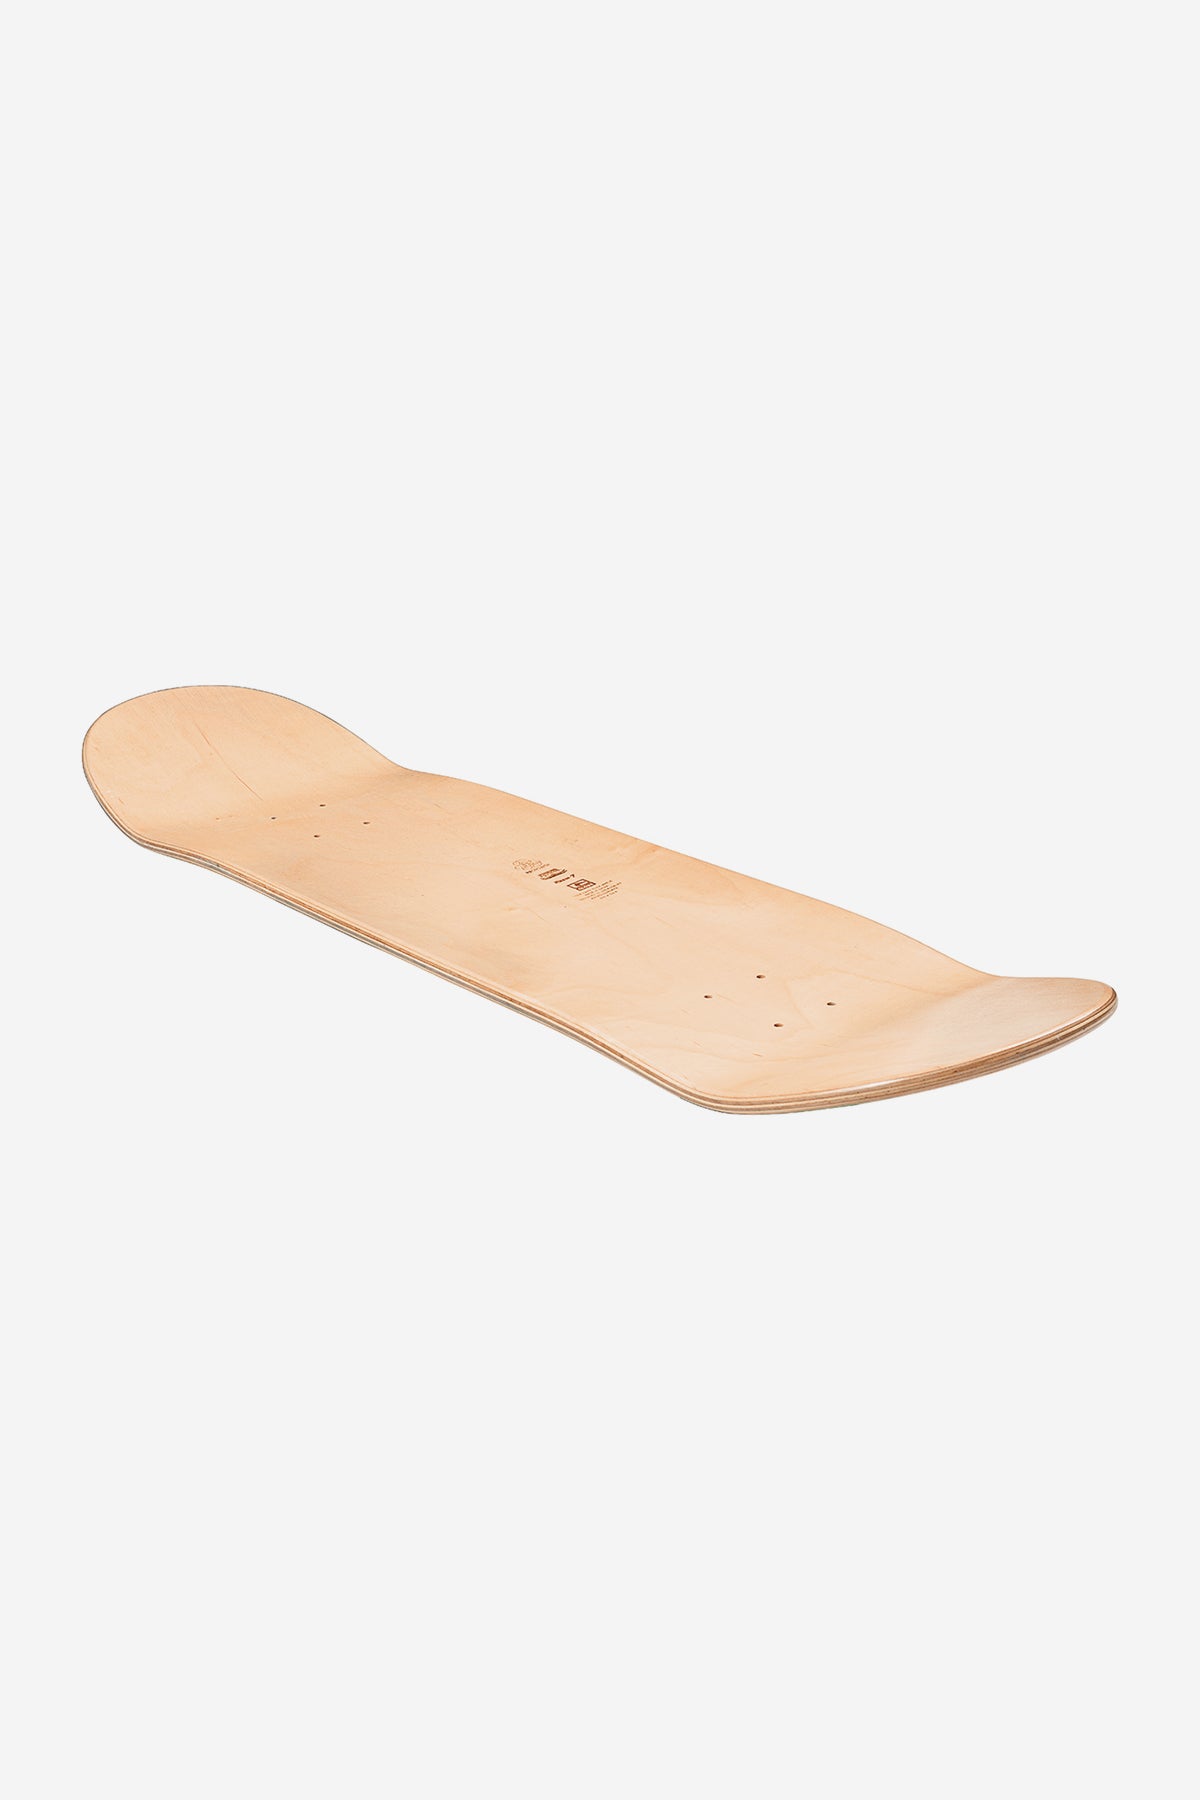 Globe - Goodstock - Red - 7.75" Skateboard Deck